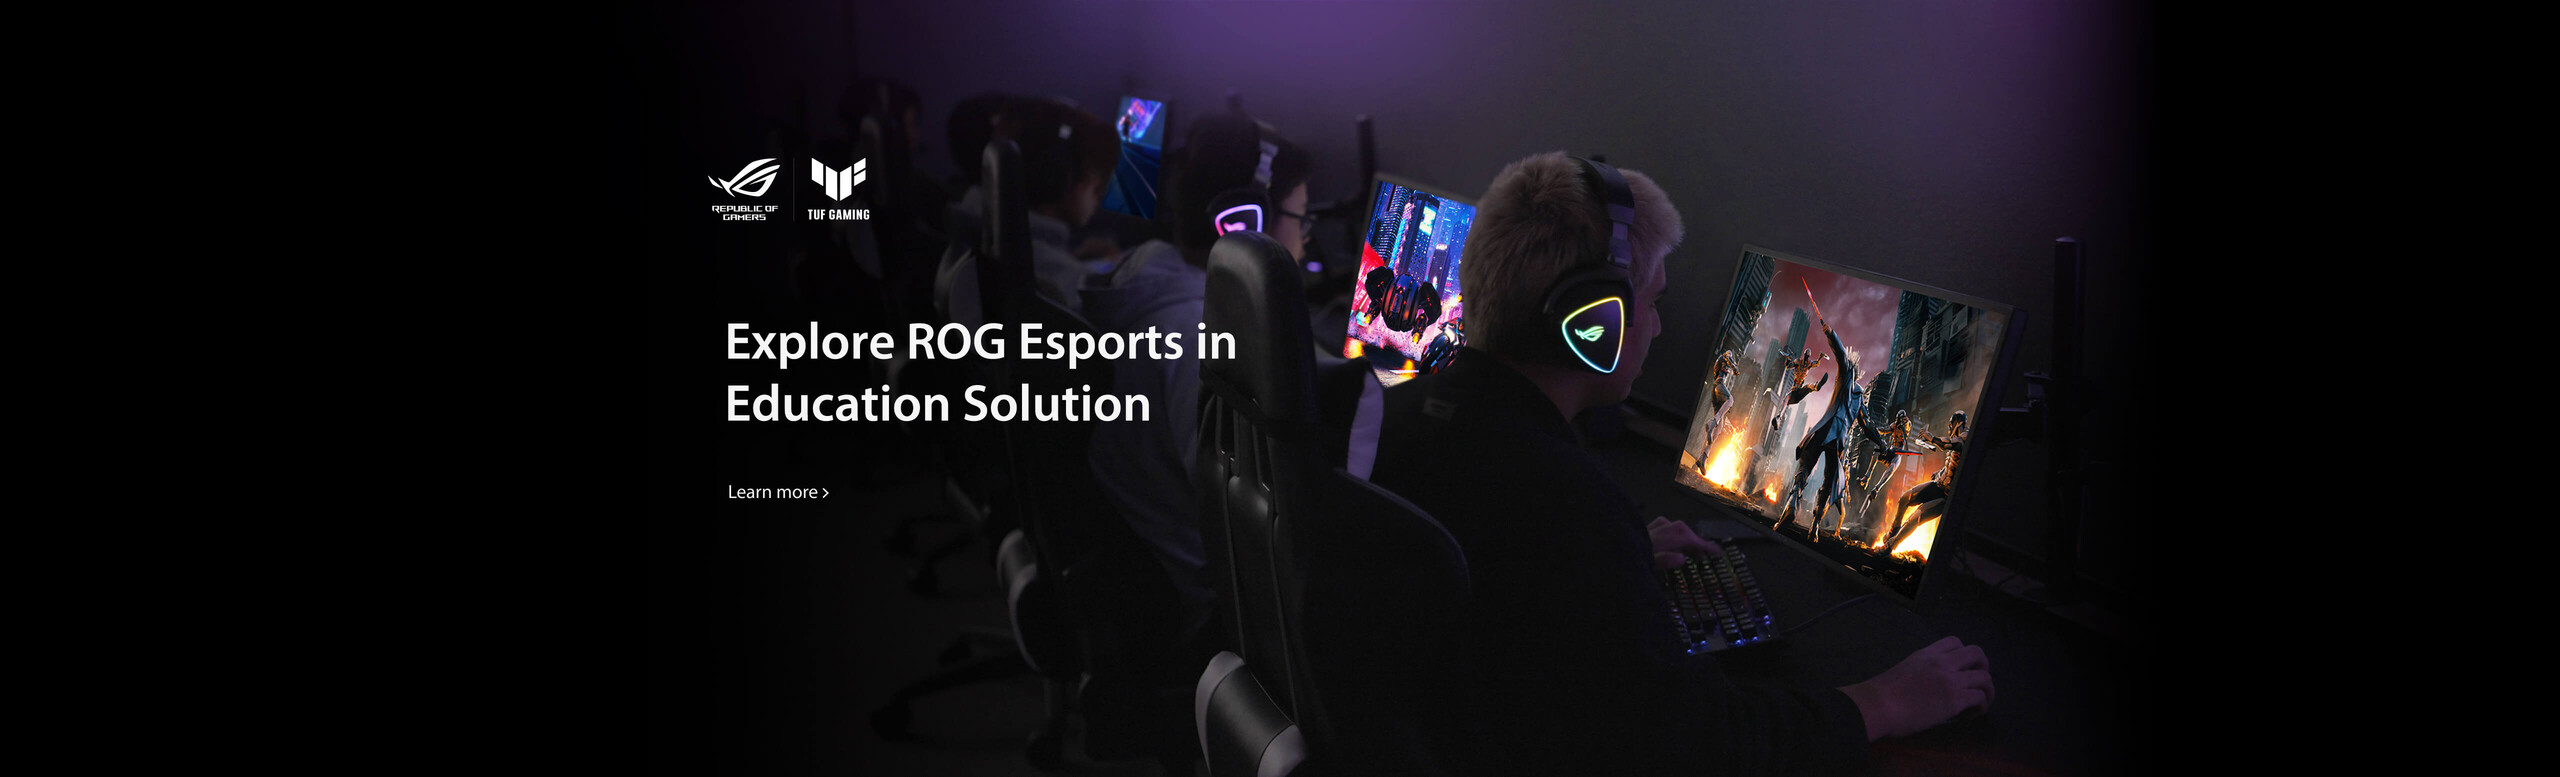 Explore ROG Esports in Education Solution